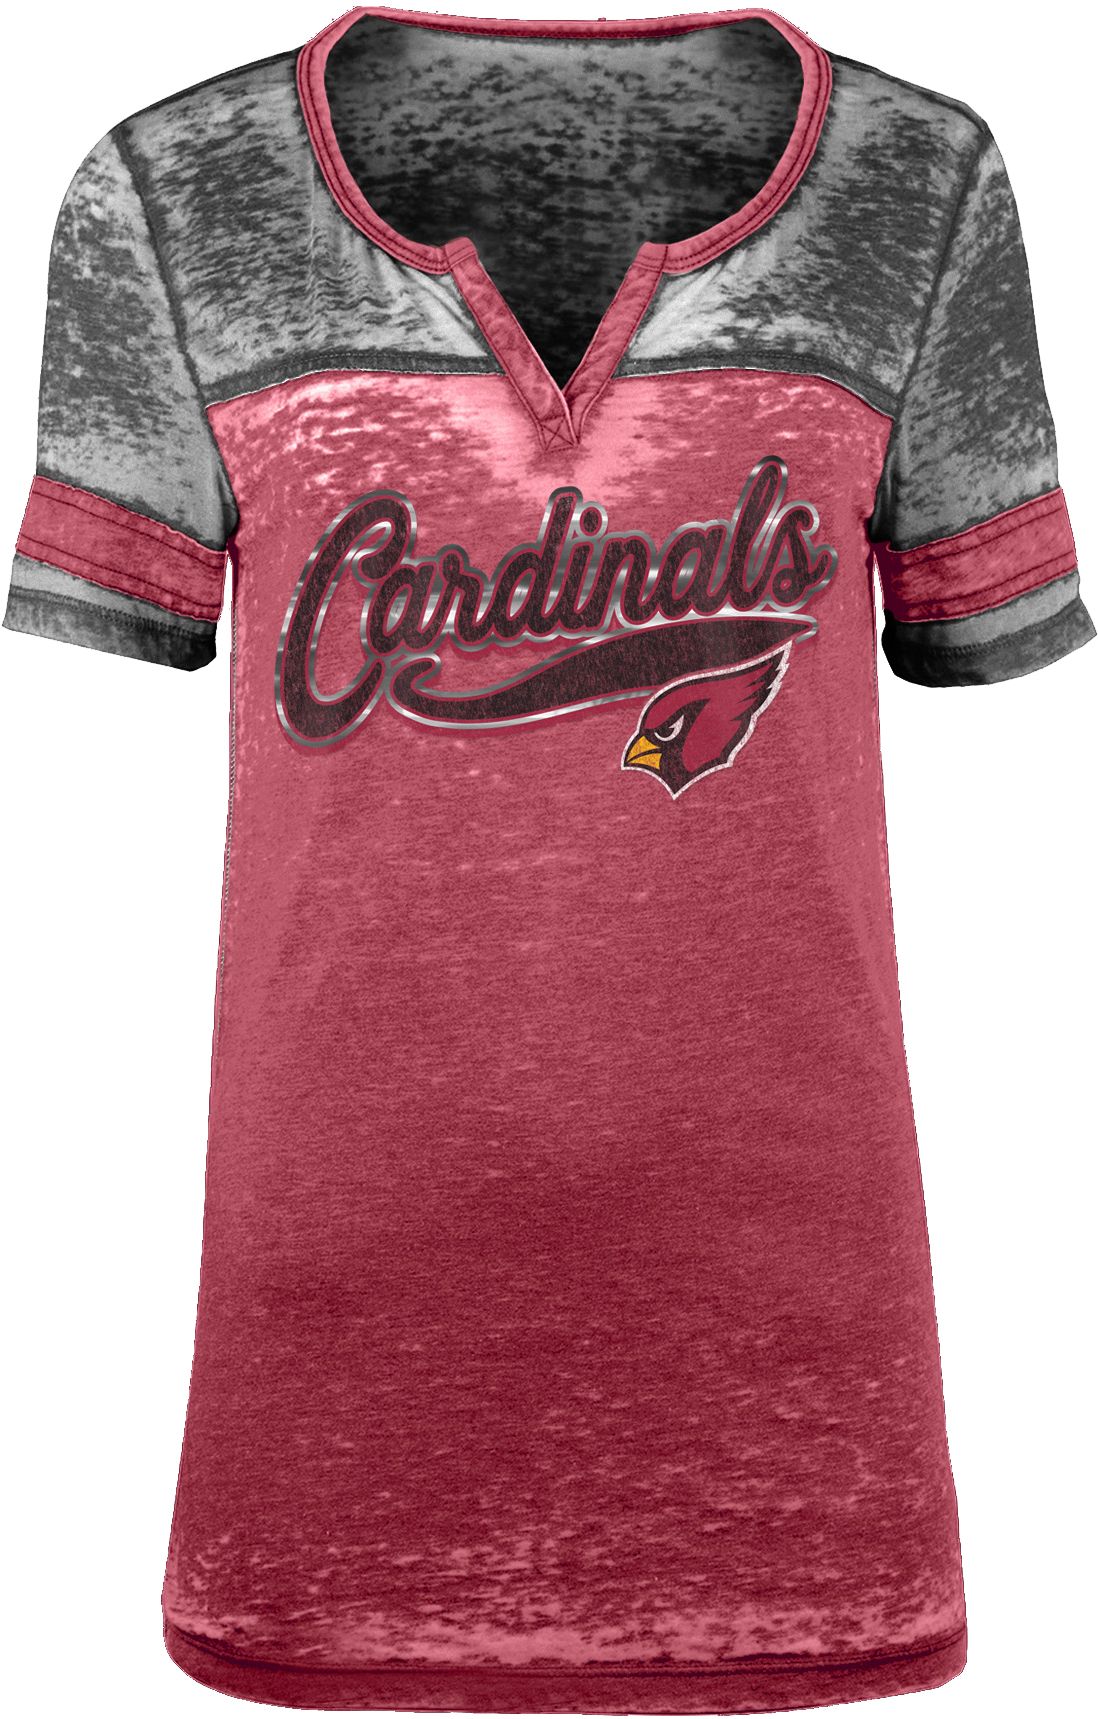 az cardinals women's shirts